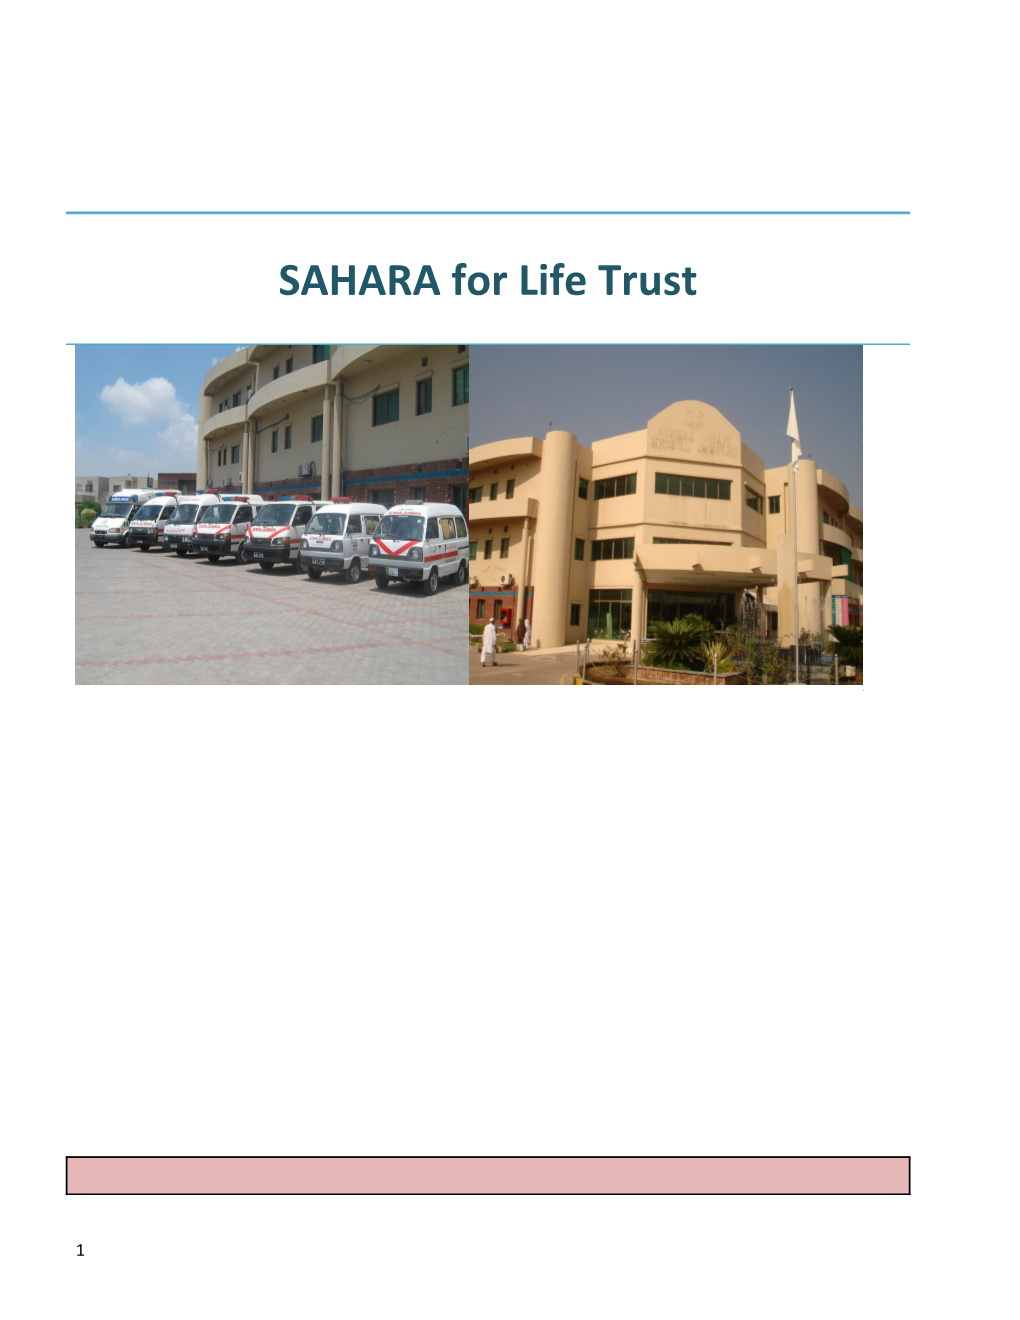 Abrar-Ul-Haq - Chairman Sahara for Life Trust